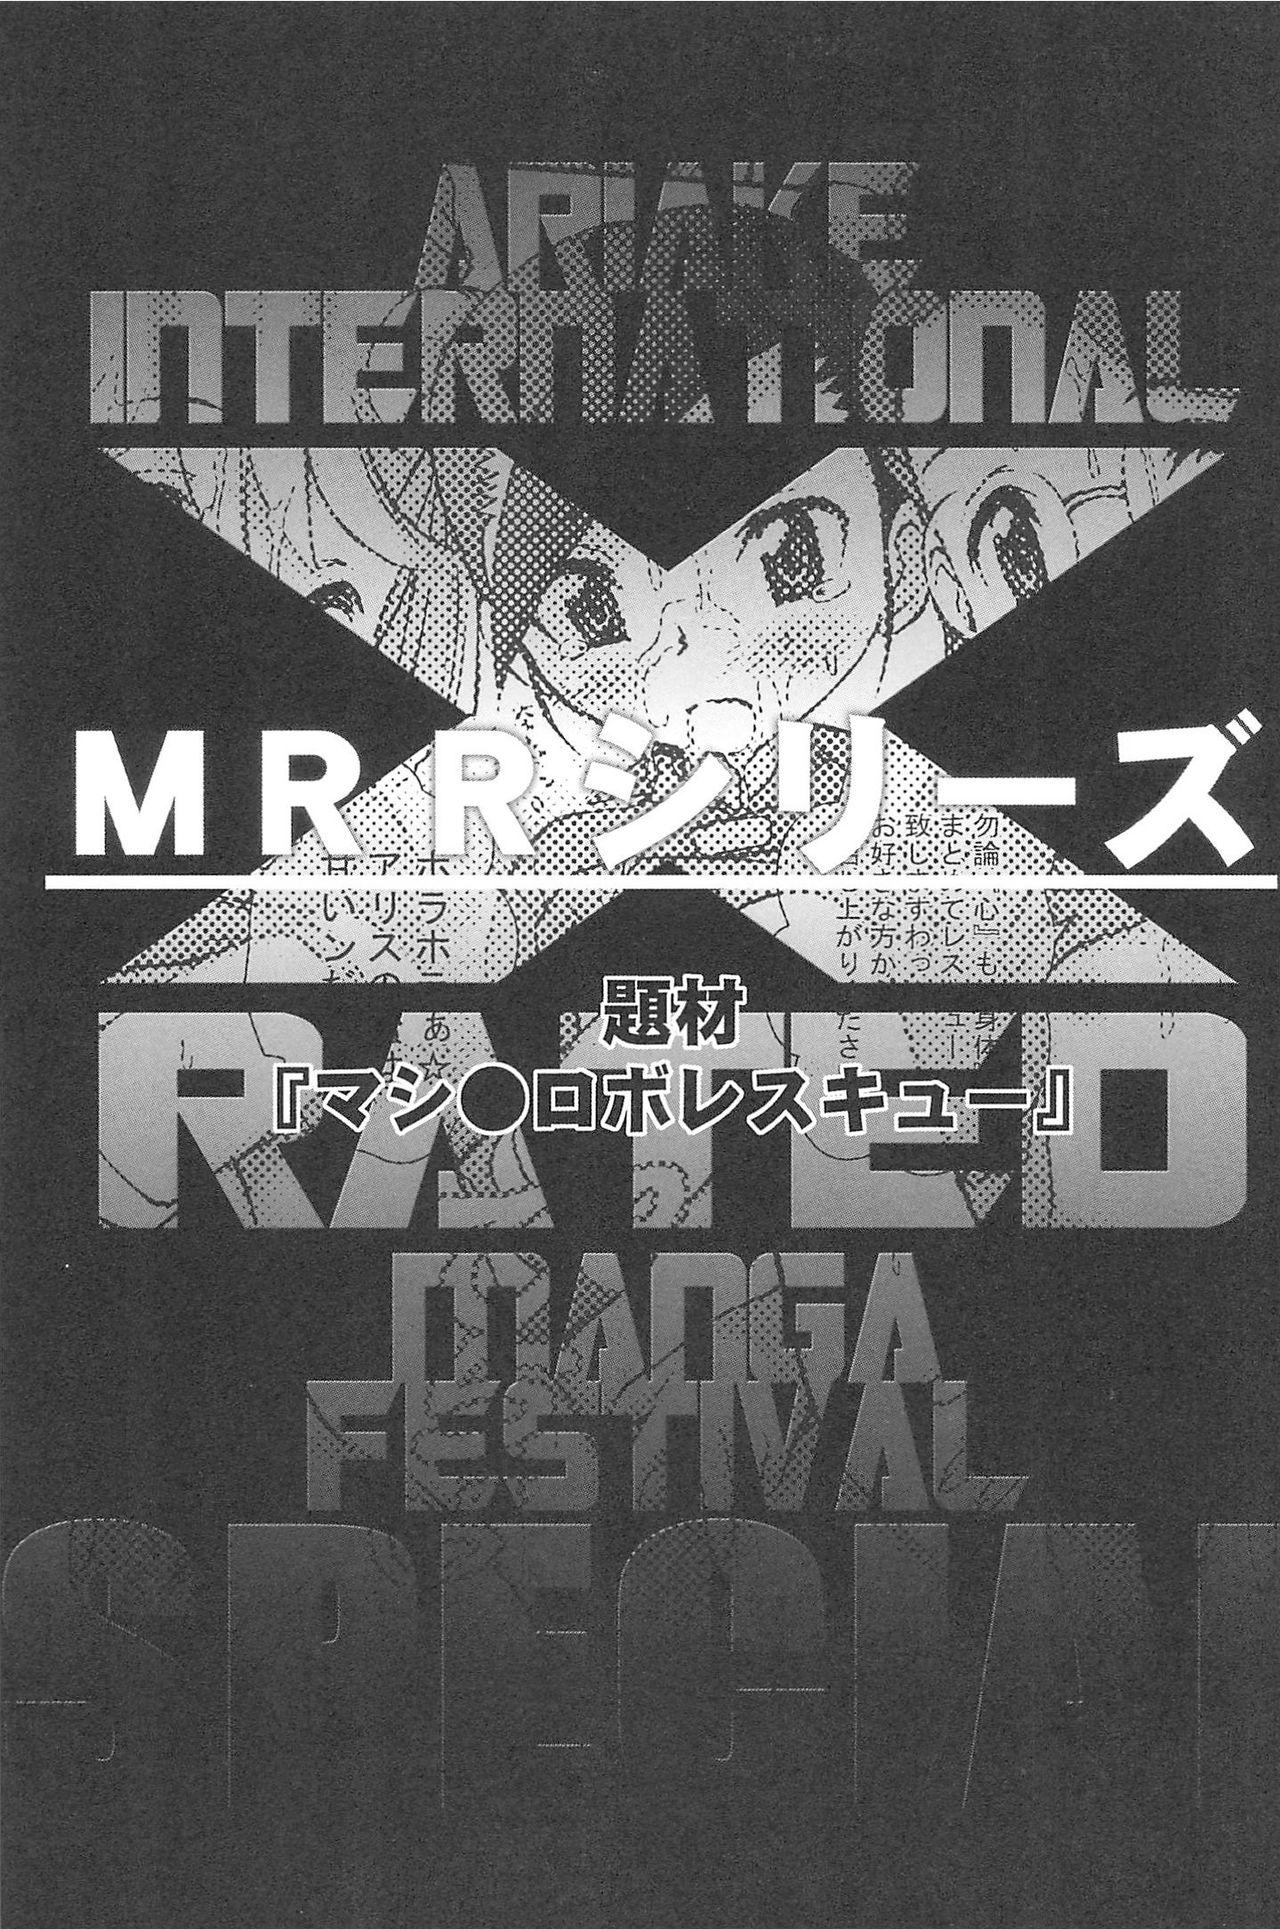 Ariake International X-rated Manga Festival Mercy Rabbit SPECIAL 72